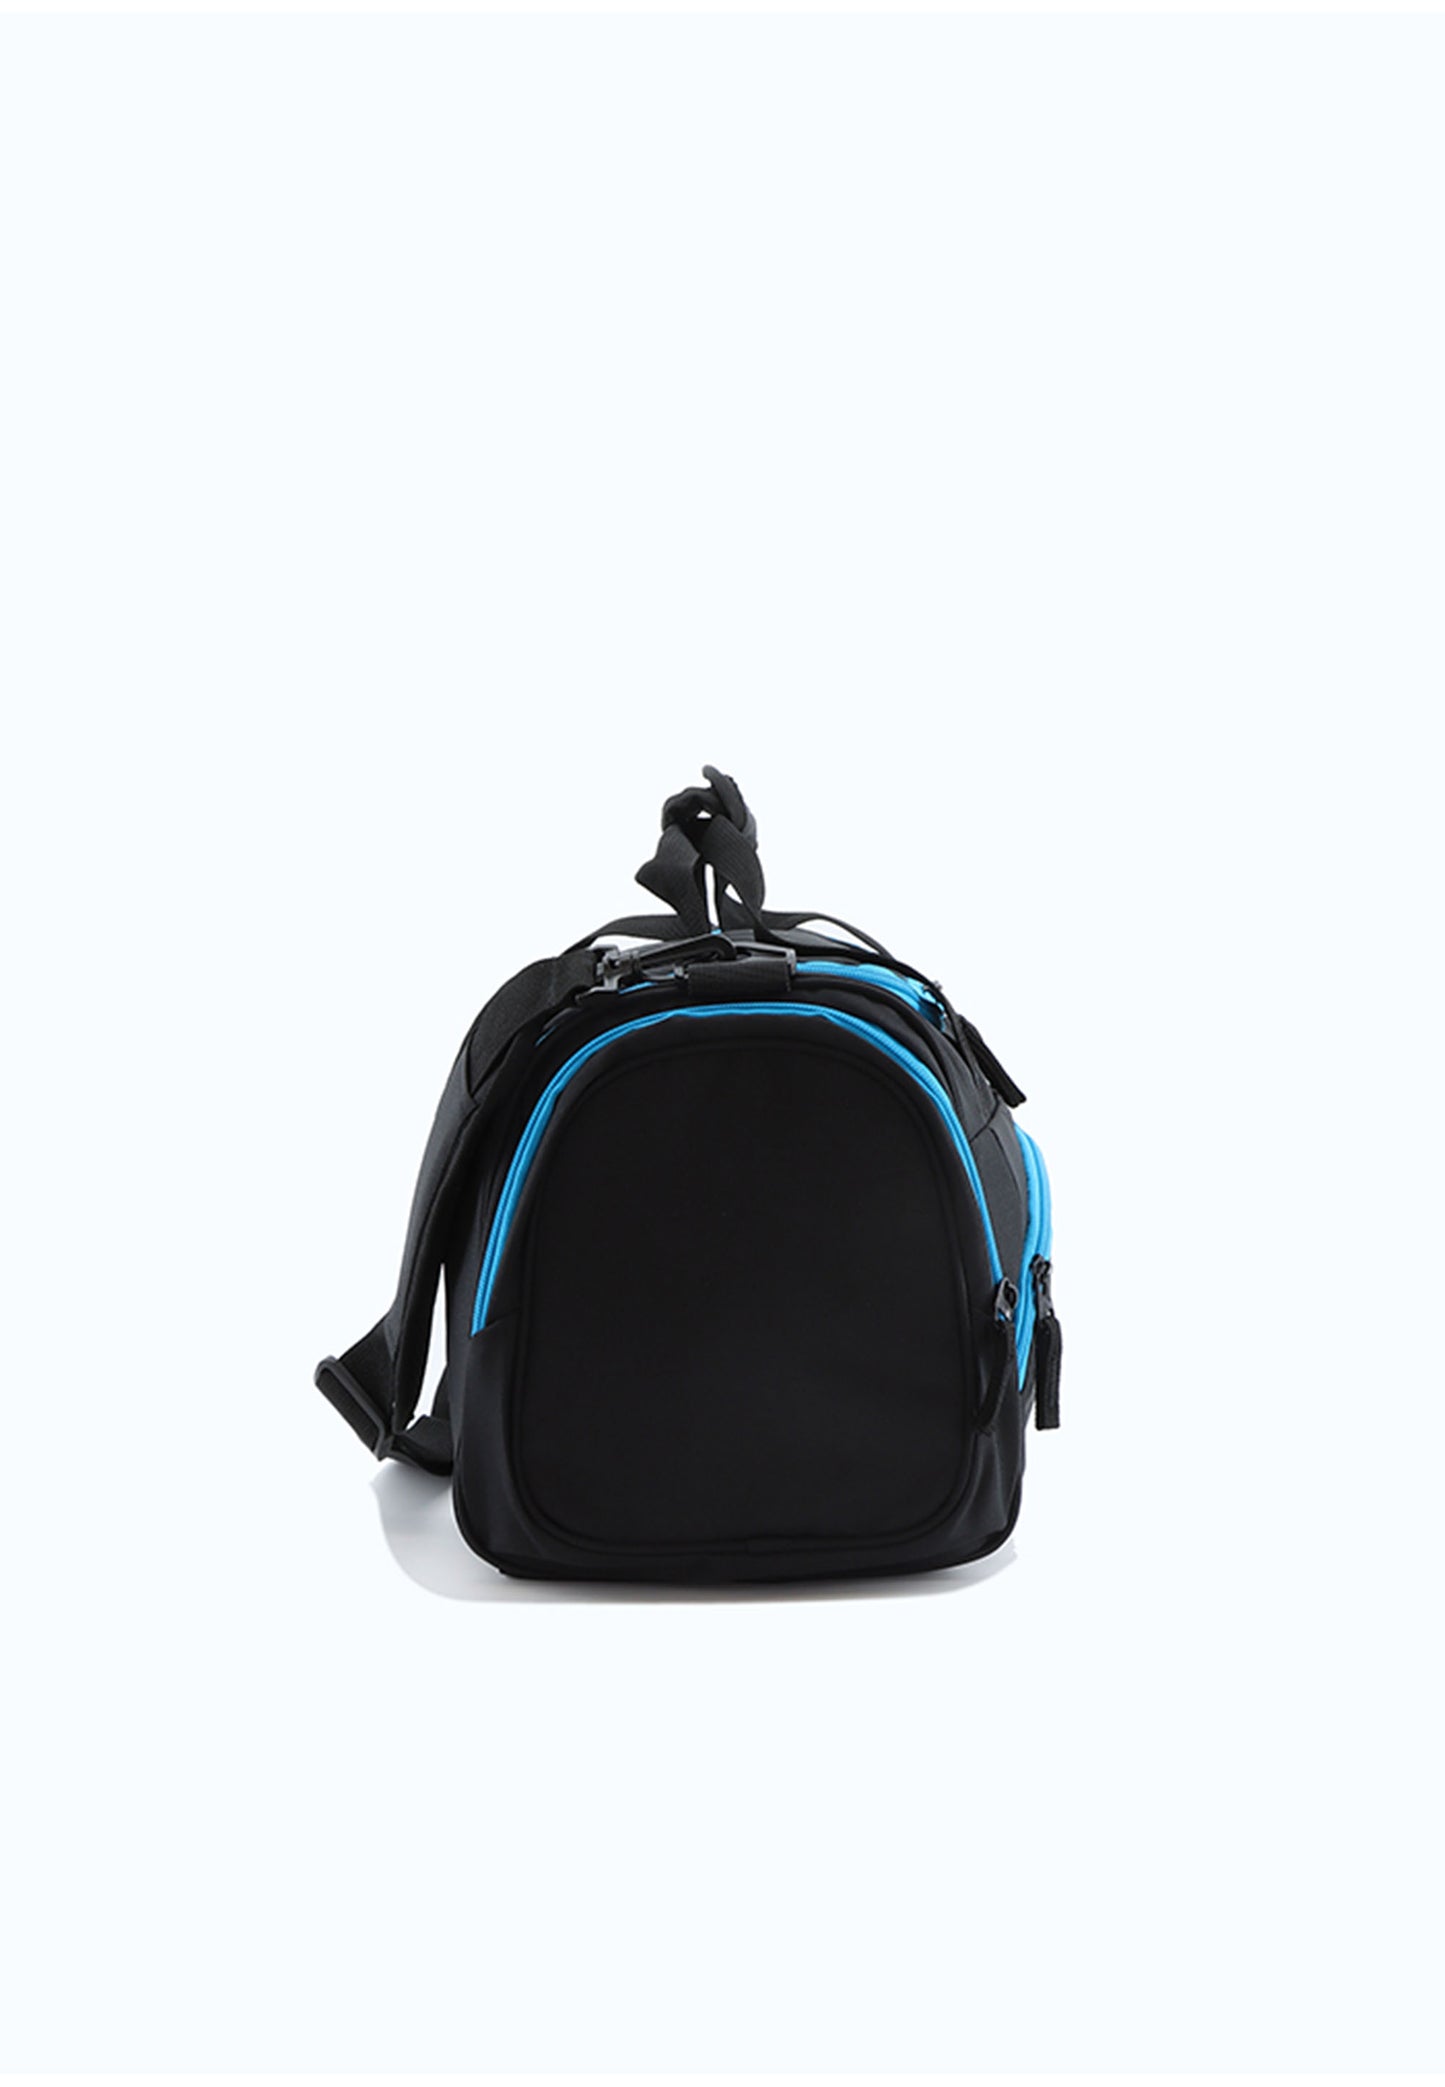 Goodyear Duffle Bag / Sac de voyage / Sac de sport - RPET - Noir